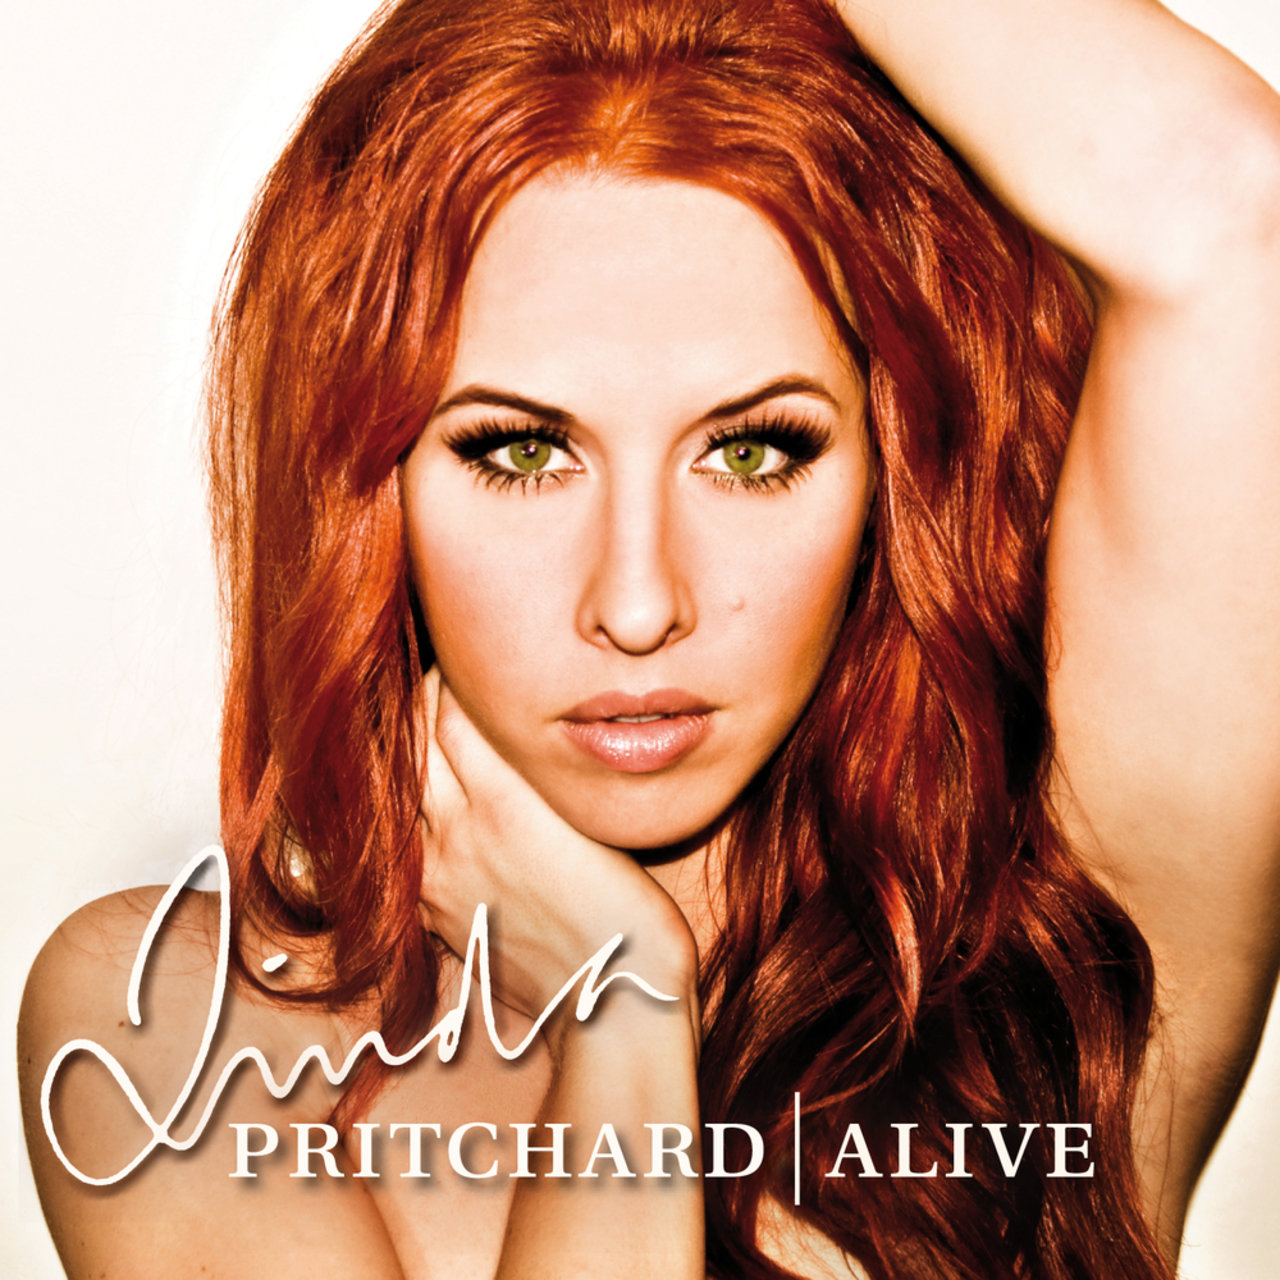 Linda Pritchard — Alive cover artwork